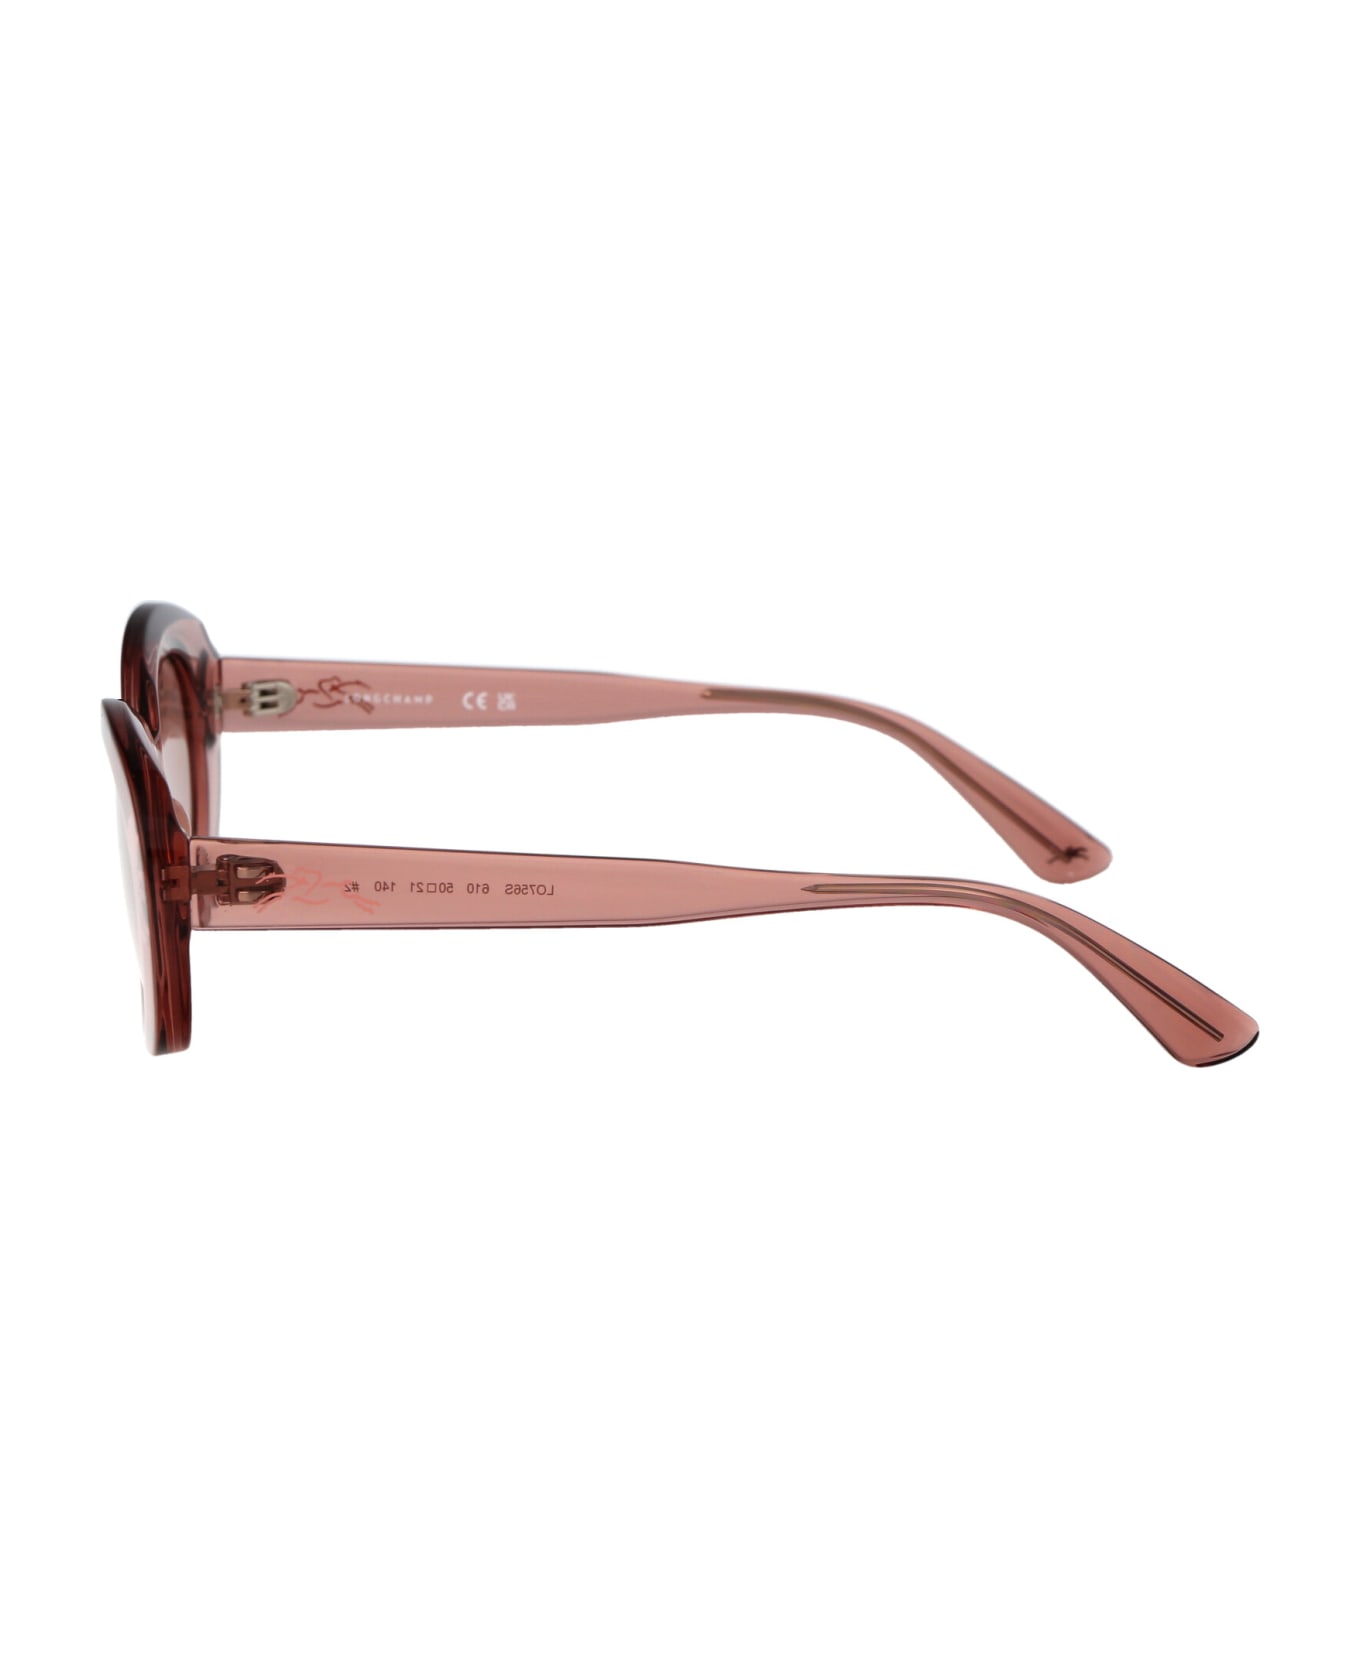 Longchamp Lo756s Sunglasses - 610 TRANSPARENT ROSE